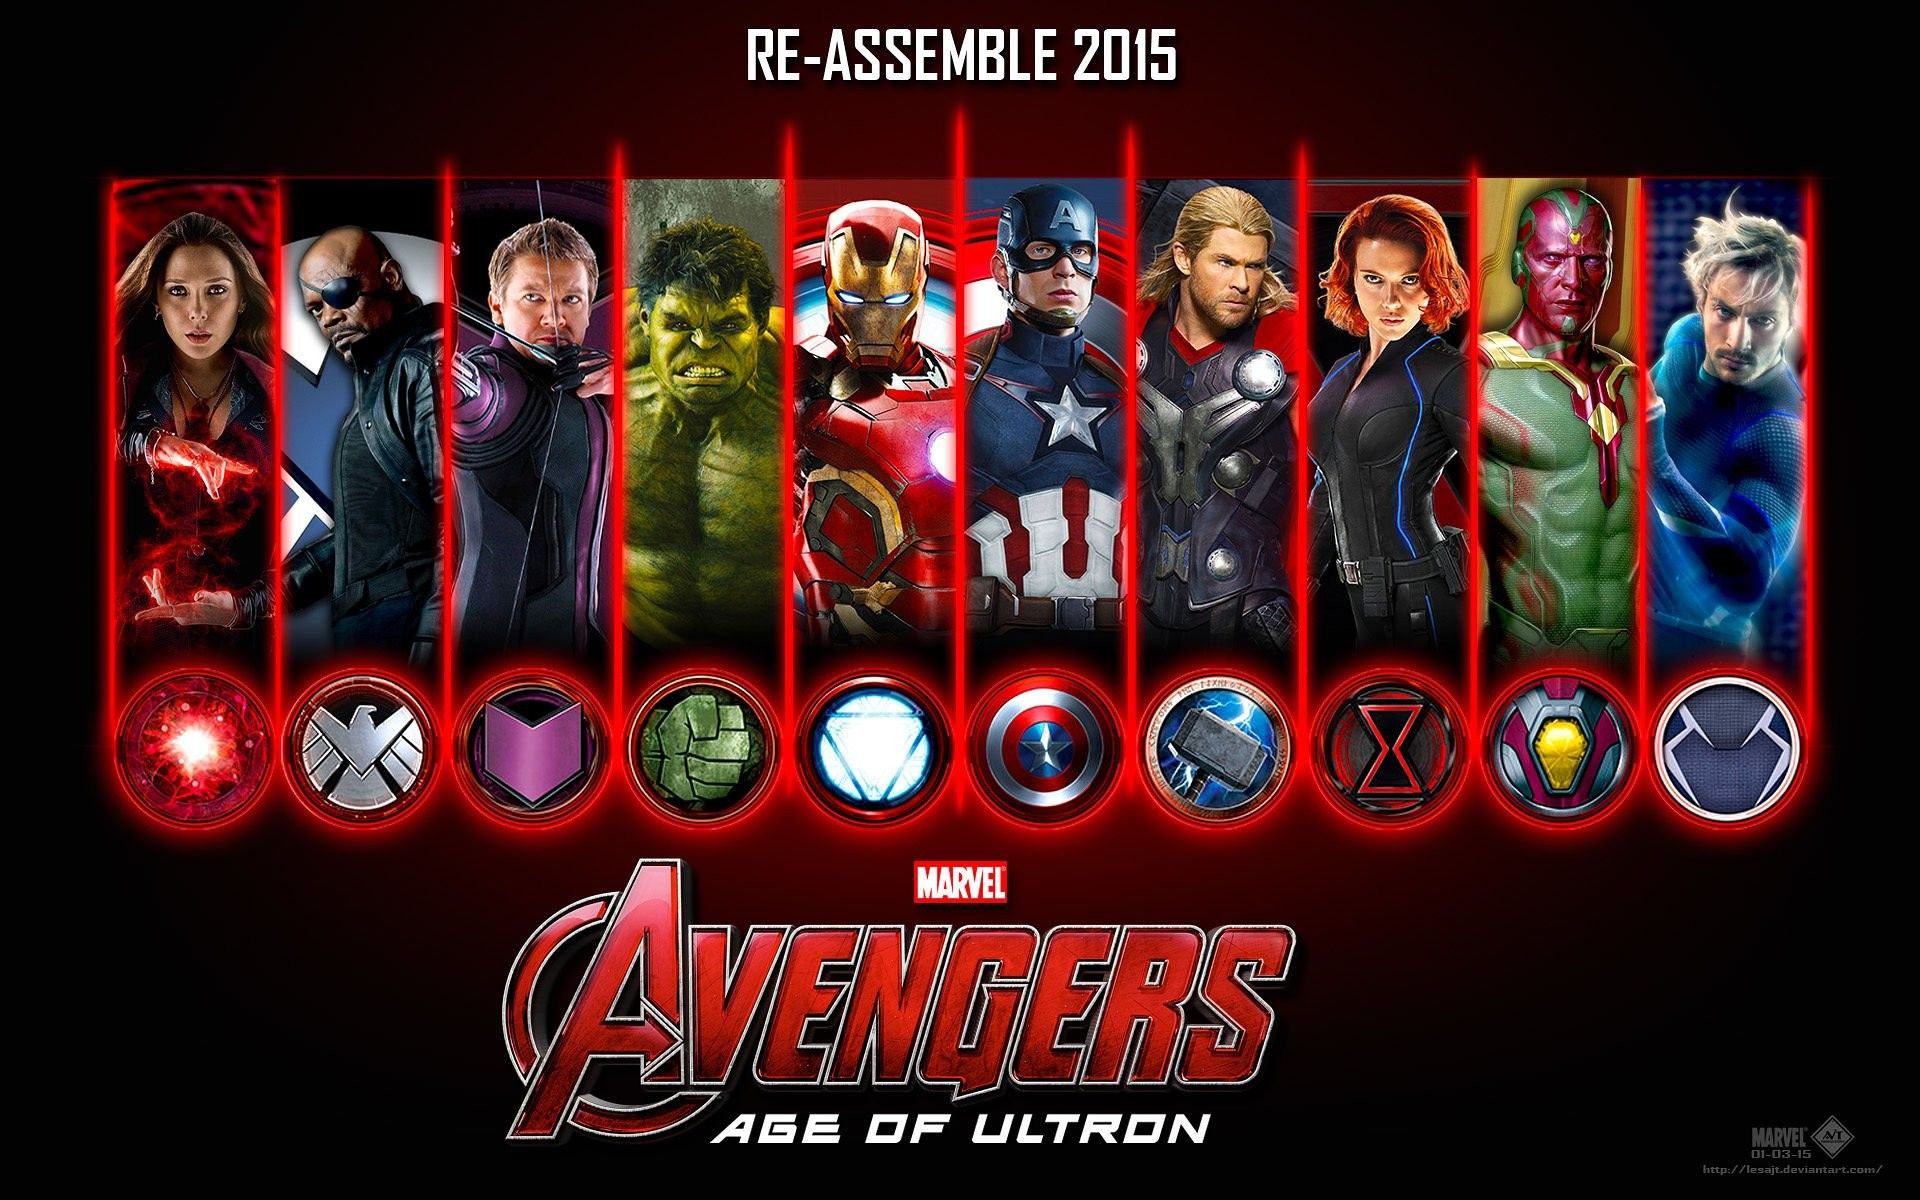 Avengers, Poster, Ultron, Marvel, Adventure, Warrior, Background Image, Cool, Fighting, Superhero, Ageultron Age, Comics, Action, Cinema Wallpaper